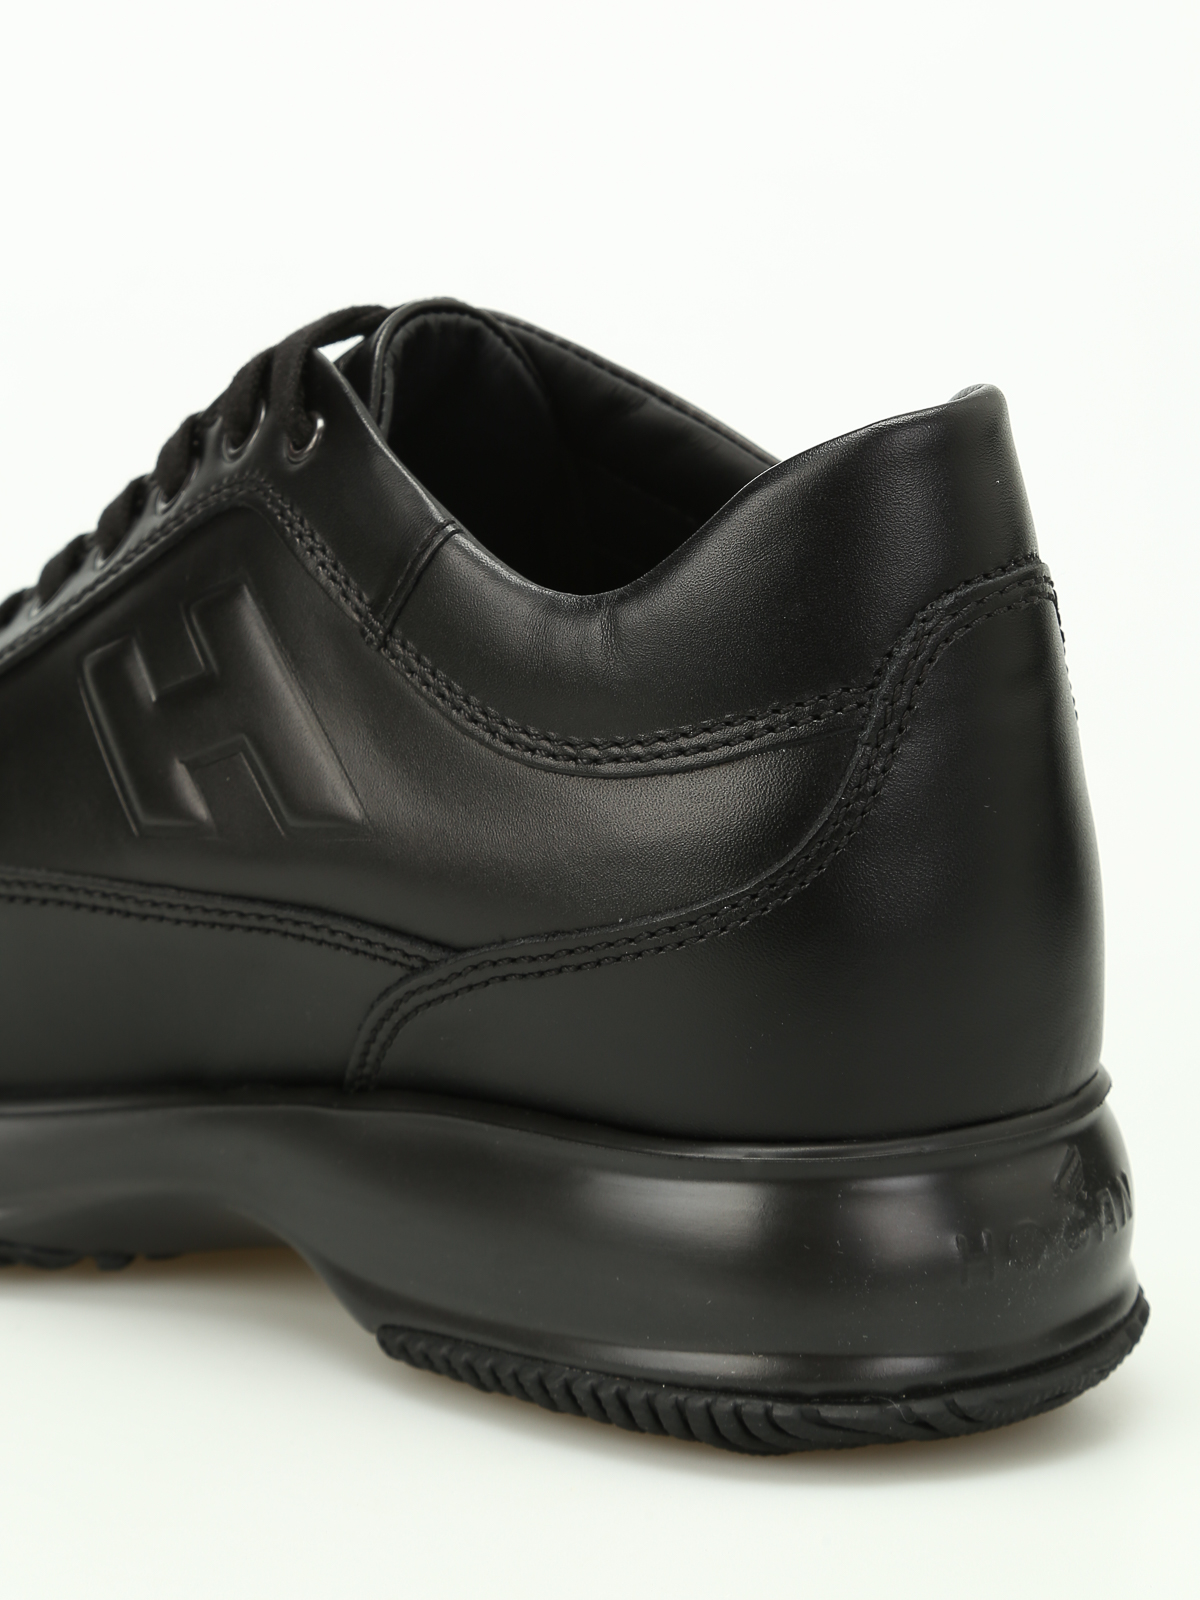 Hogan - Interactive black leather sneakers - trainers - HXM00N09042BTLB999